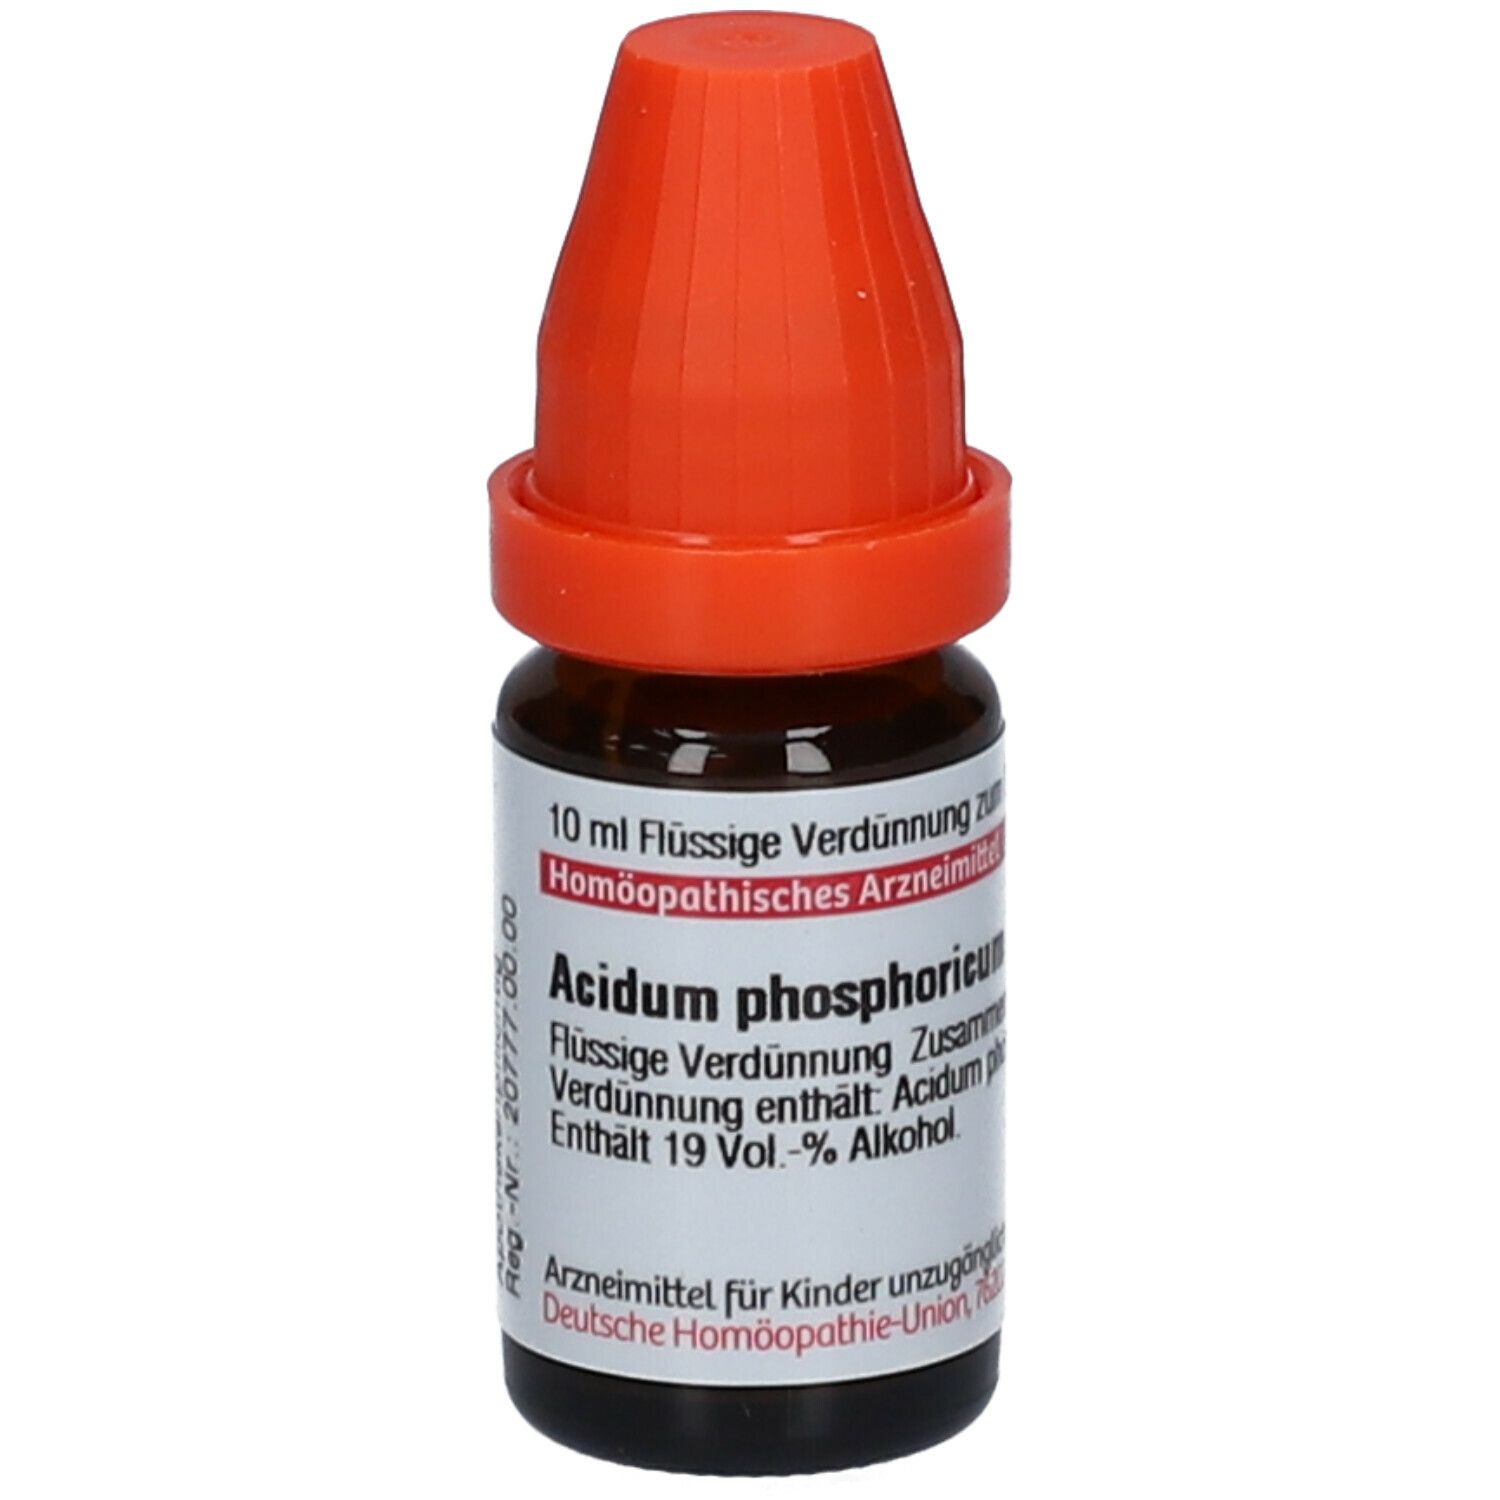 DHU Acidum Phosphoricum LM XII